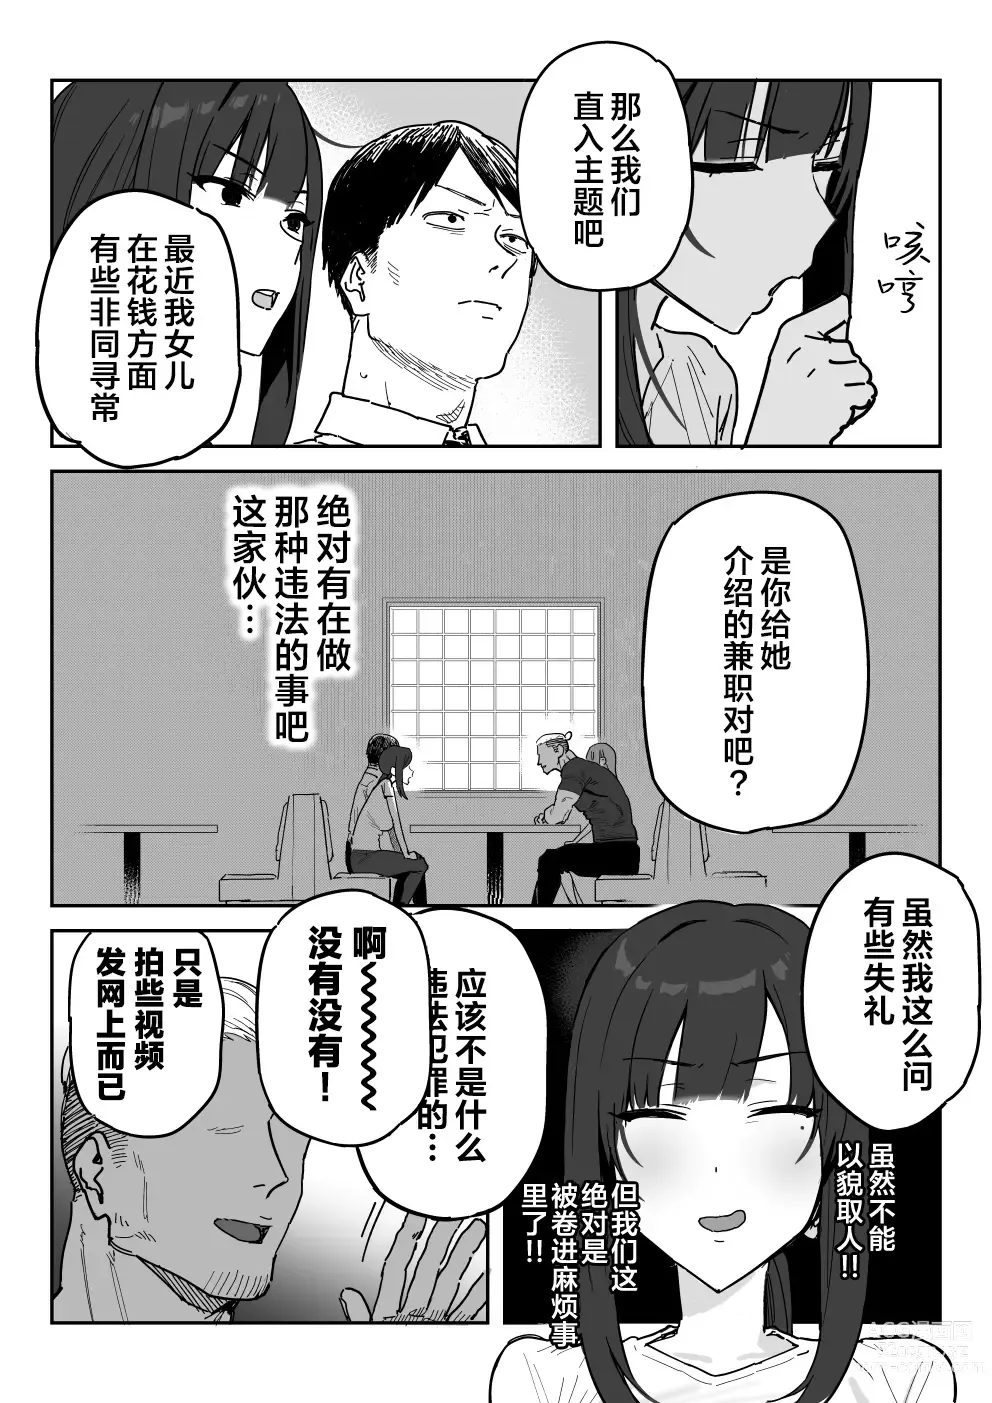 Page 6 of doujinshi 种崎佳织(39岁)代替女儿同人AV出道